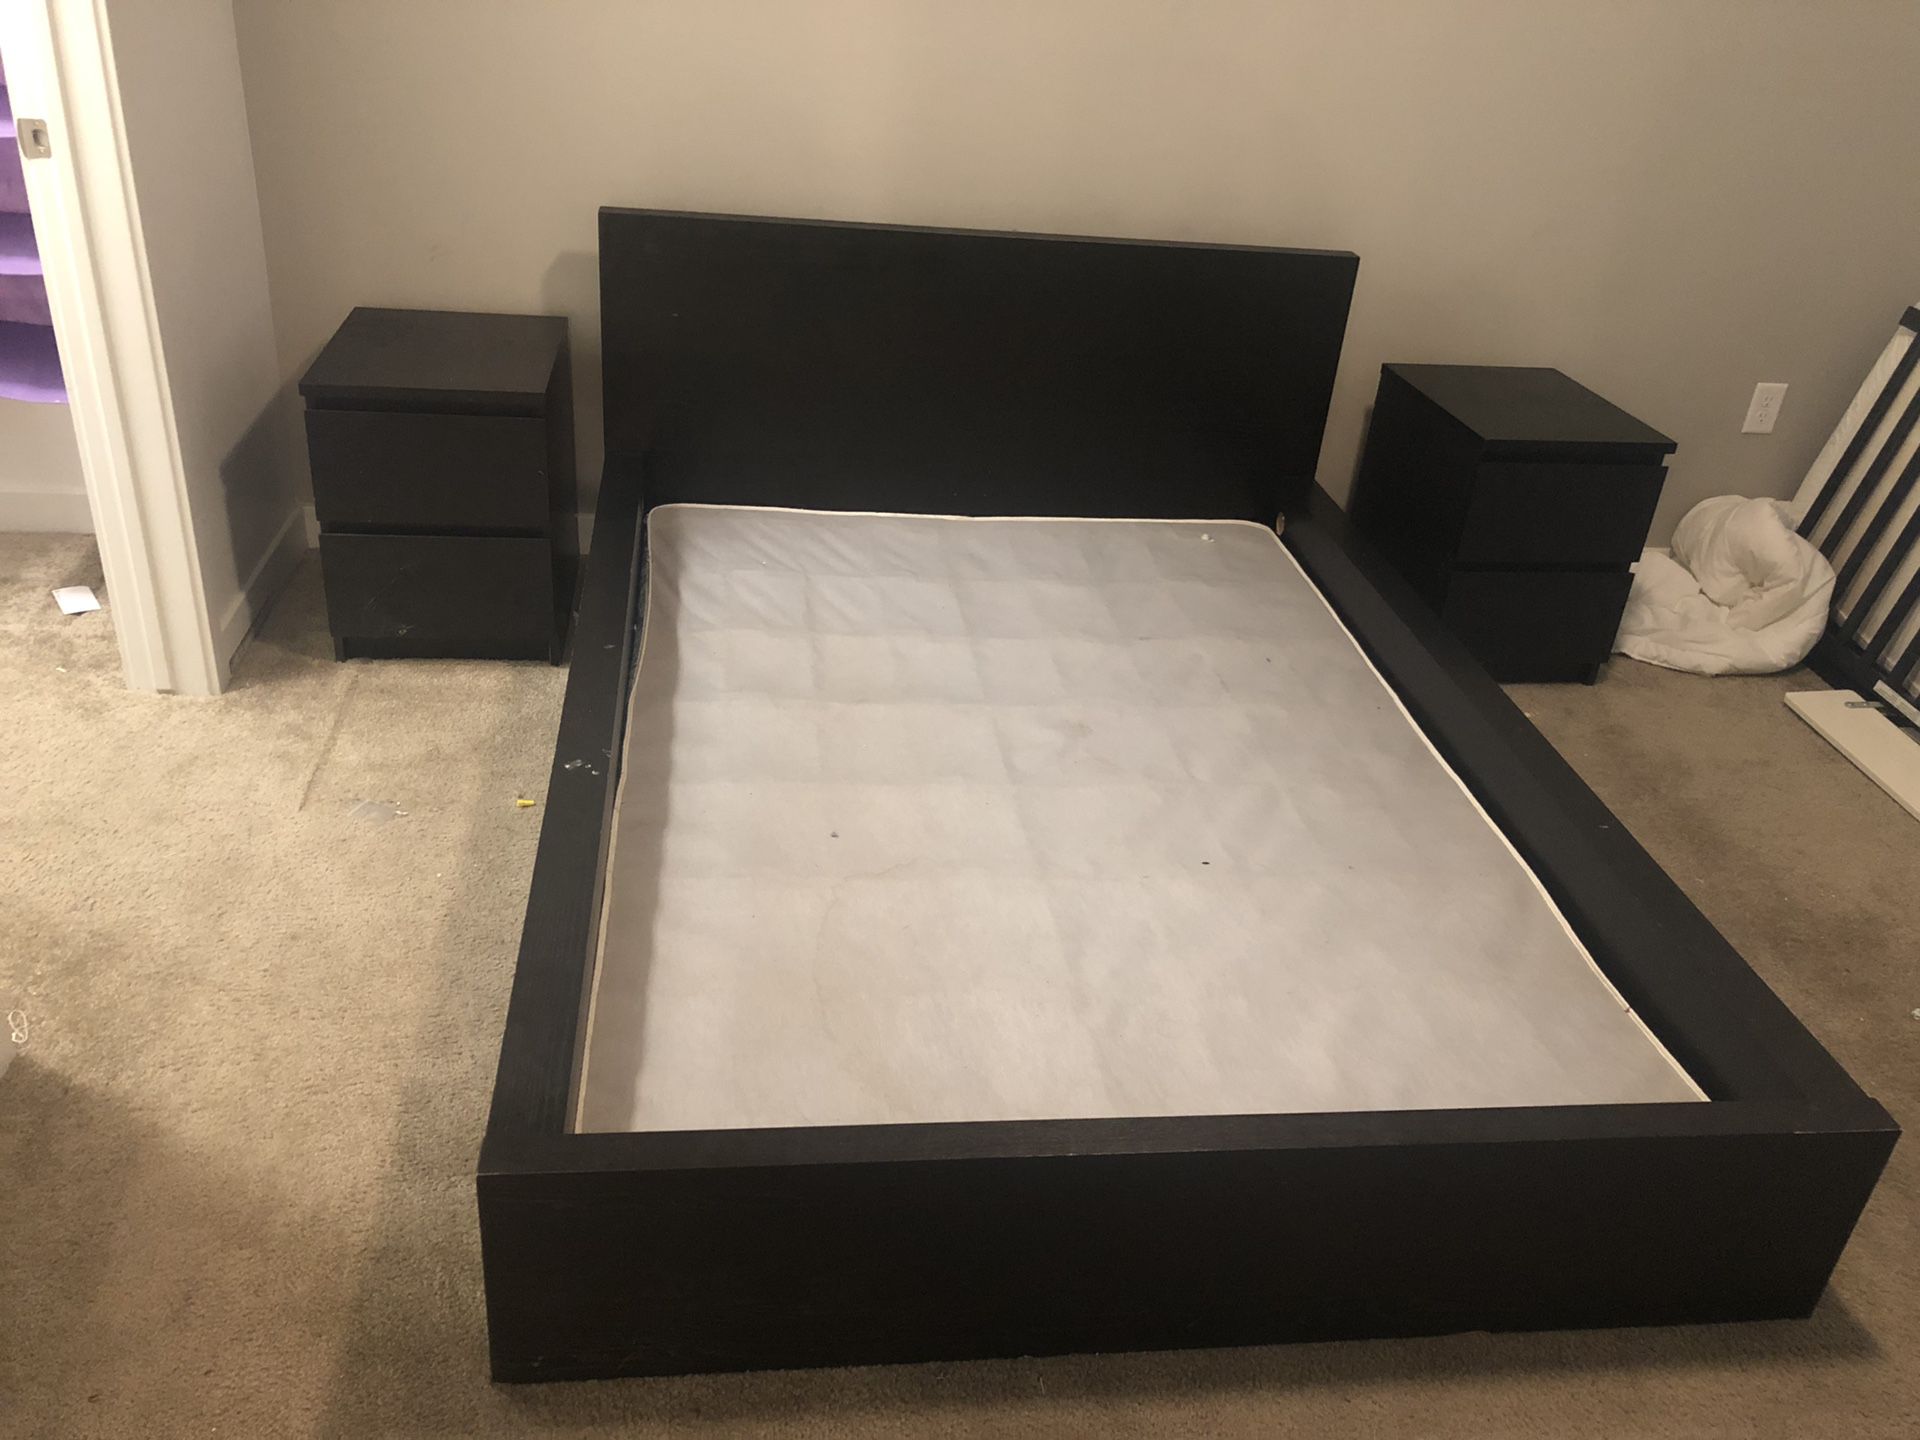 IKEA Malm bedroom set